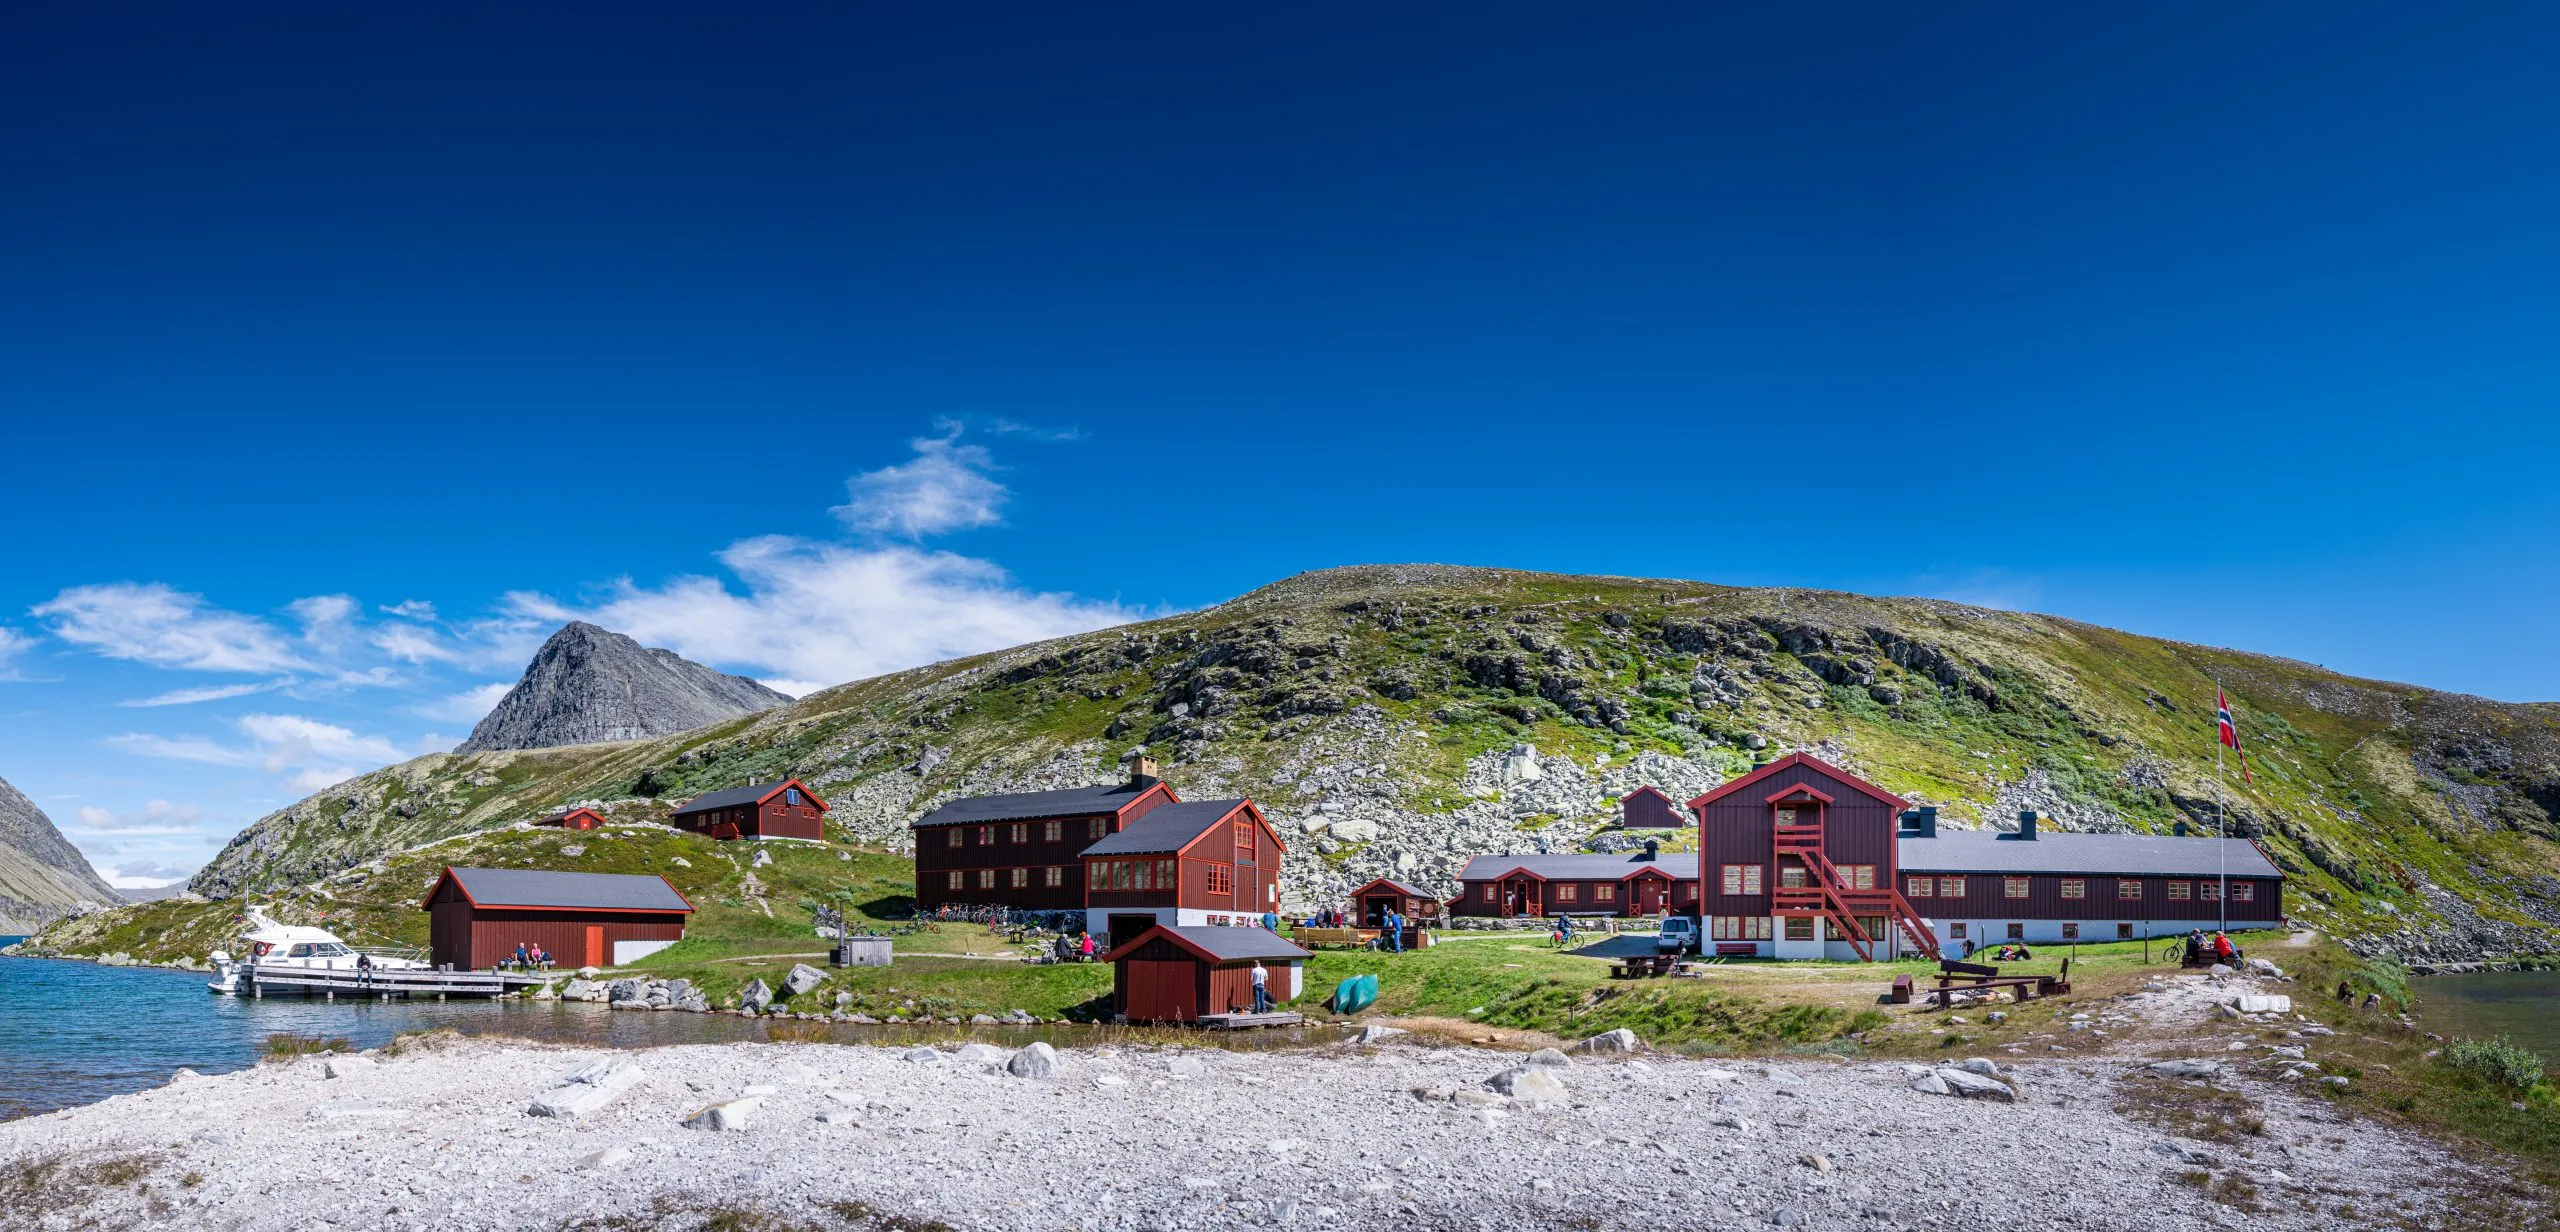 Rondvassbu DNT hut in Rondane national park, Norway